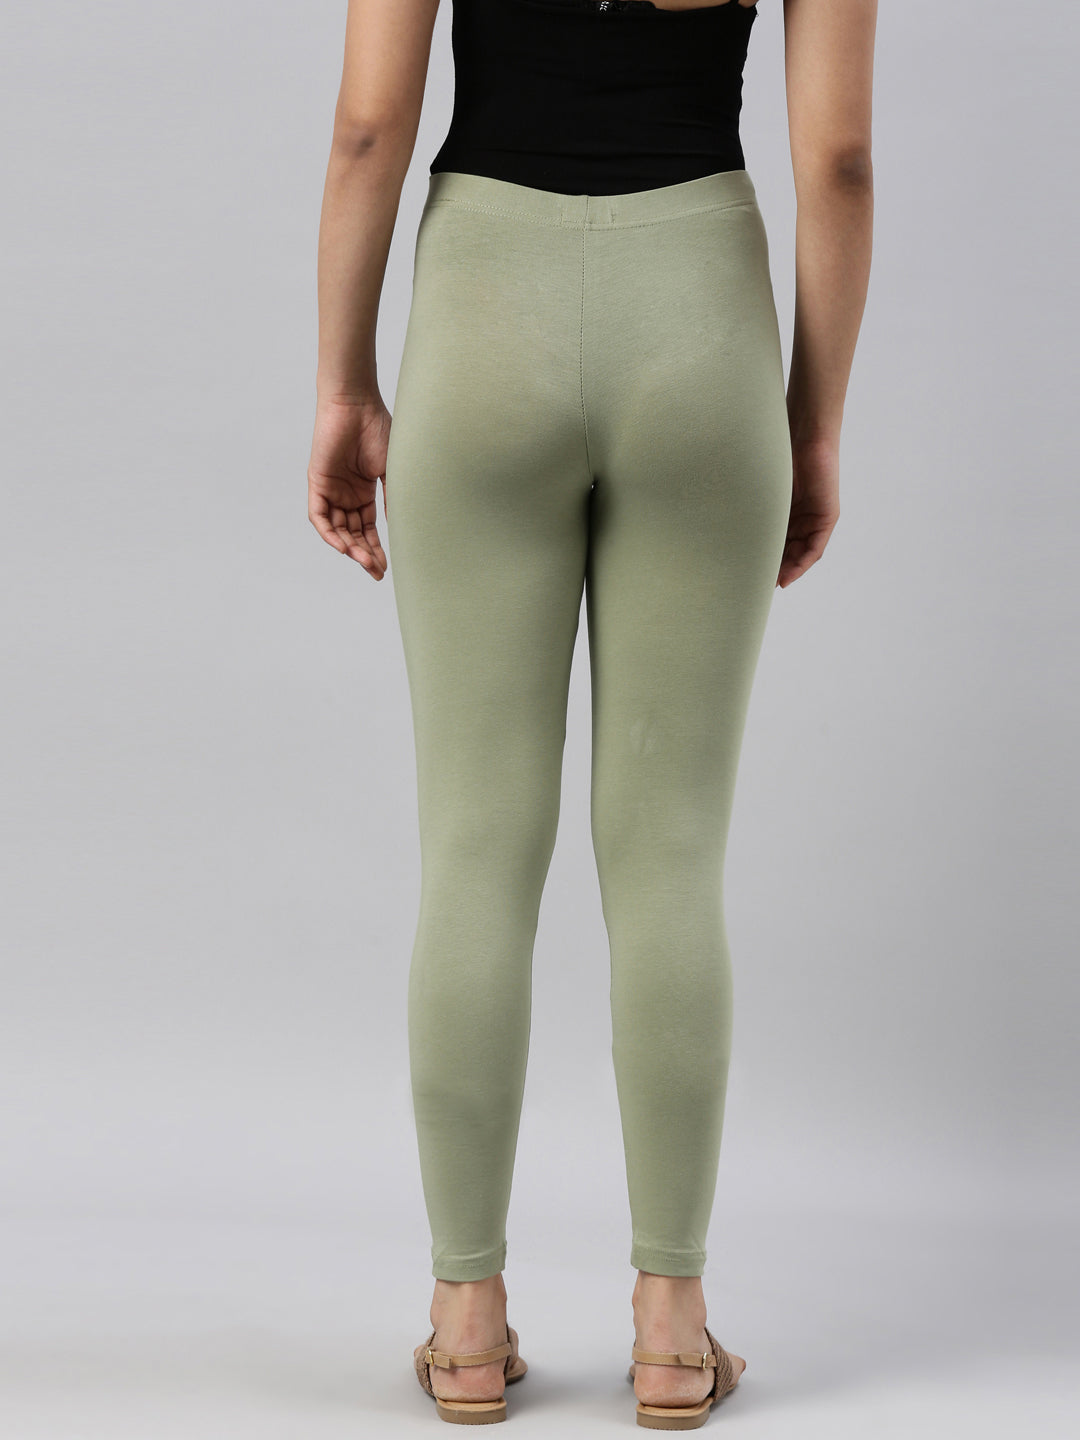 Buy Suti Women Cotton Ankle Length Leggings Lime Green online